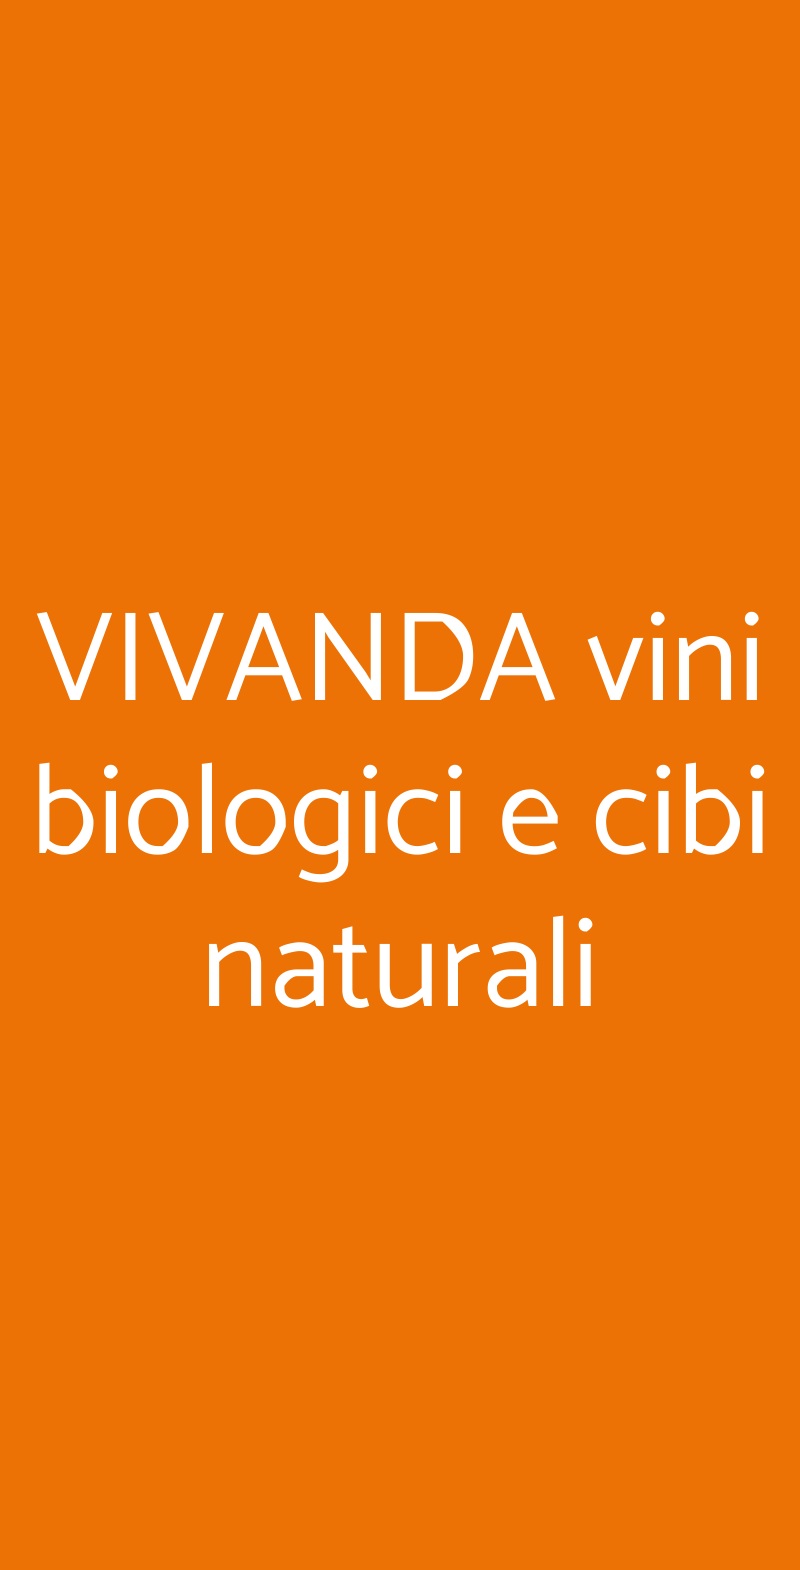 VIVANDA vini biologici e cibi naturali Firenze menù 1 pagina